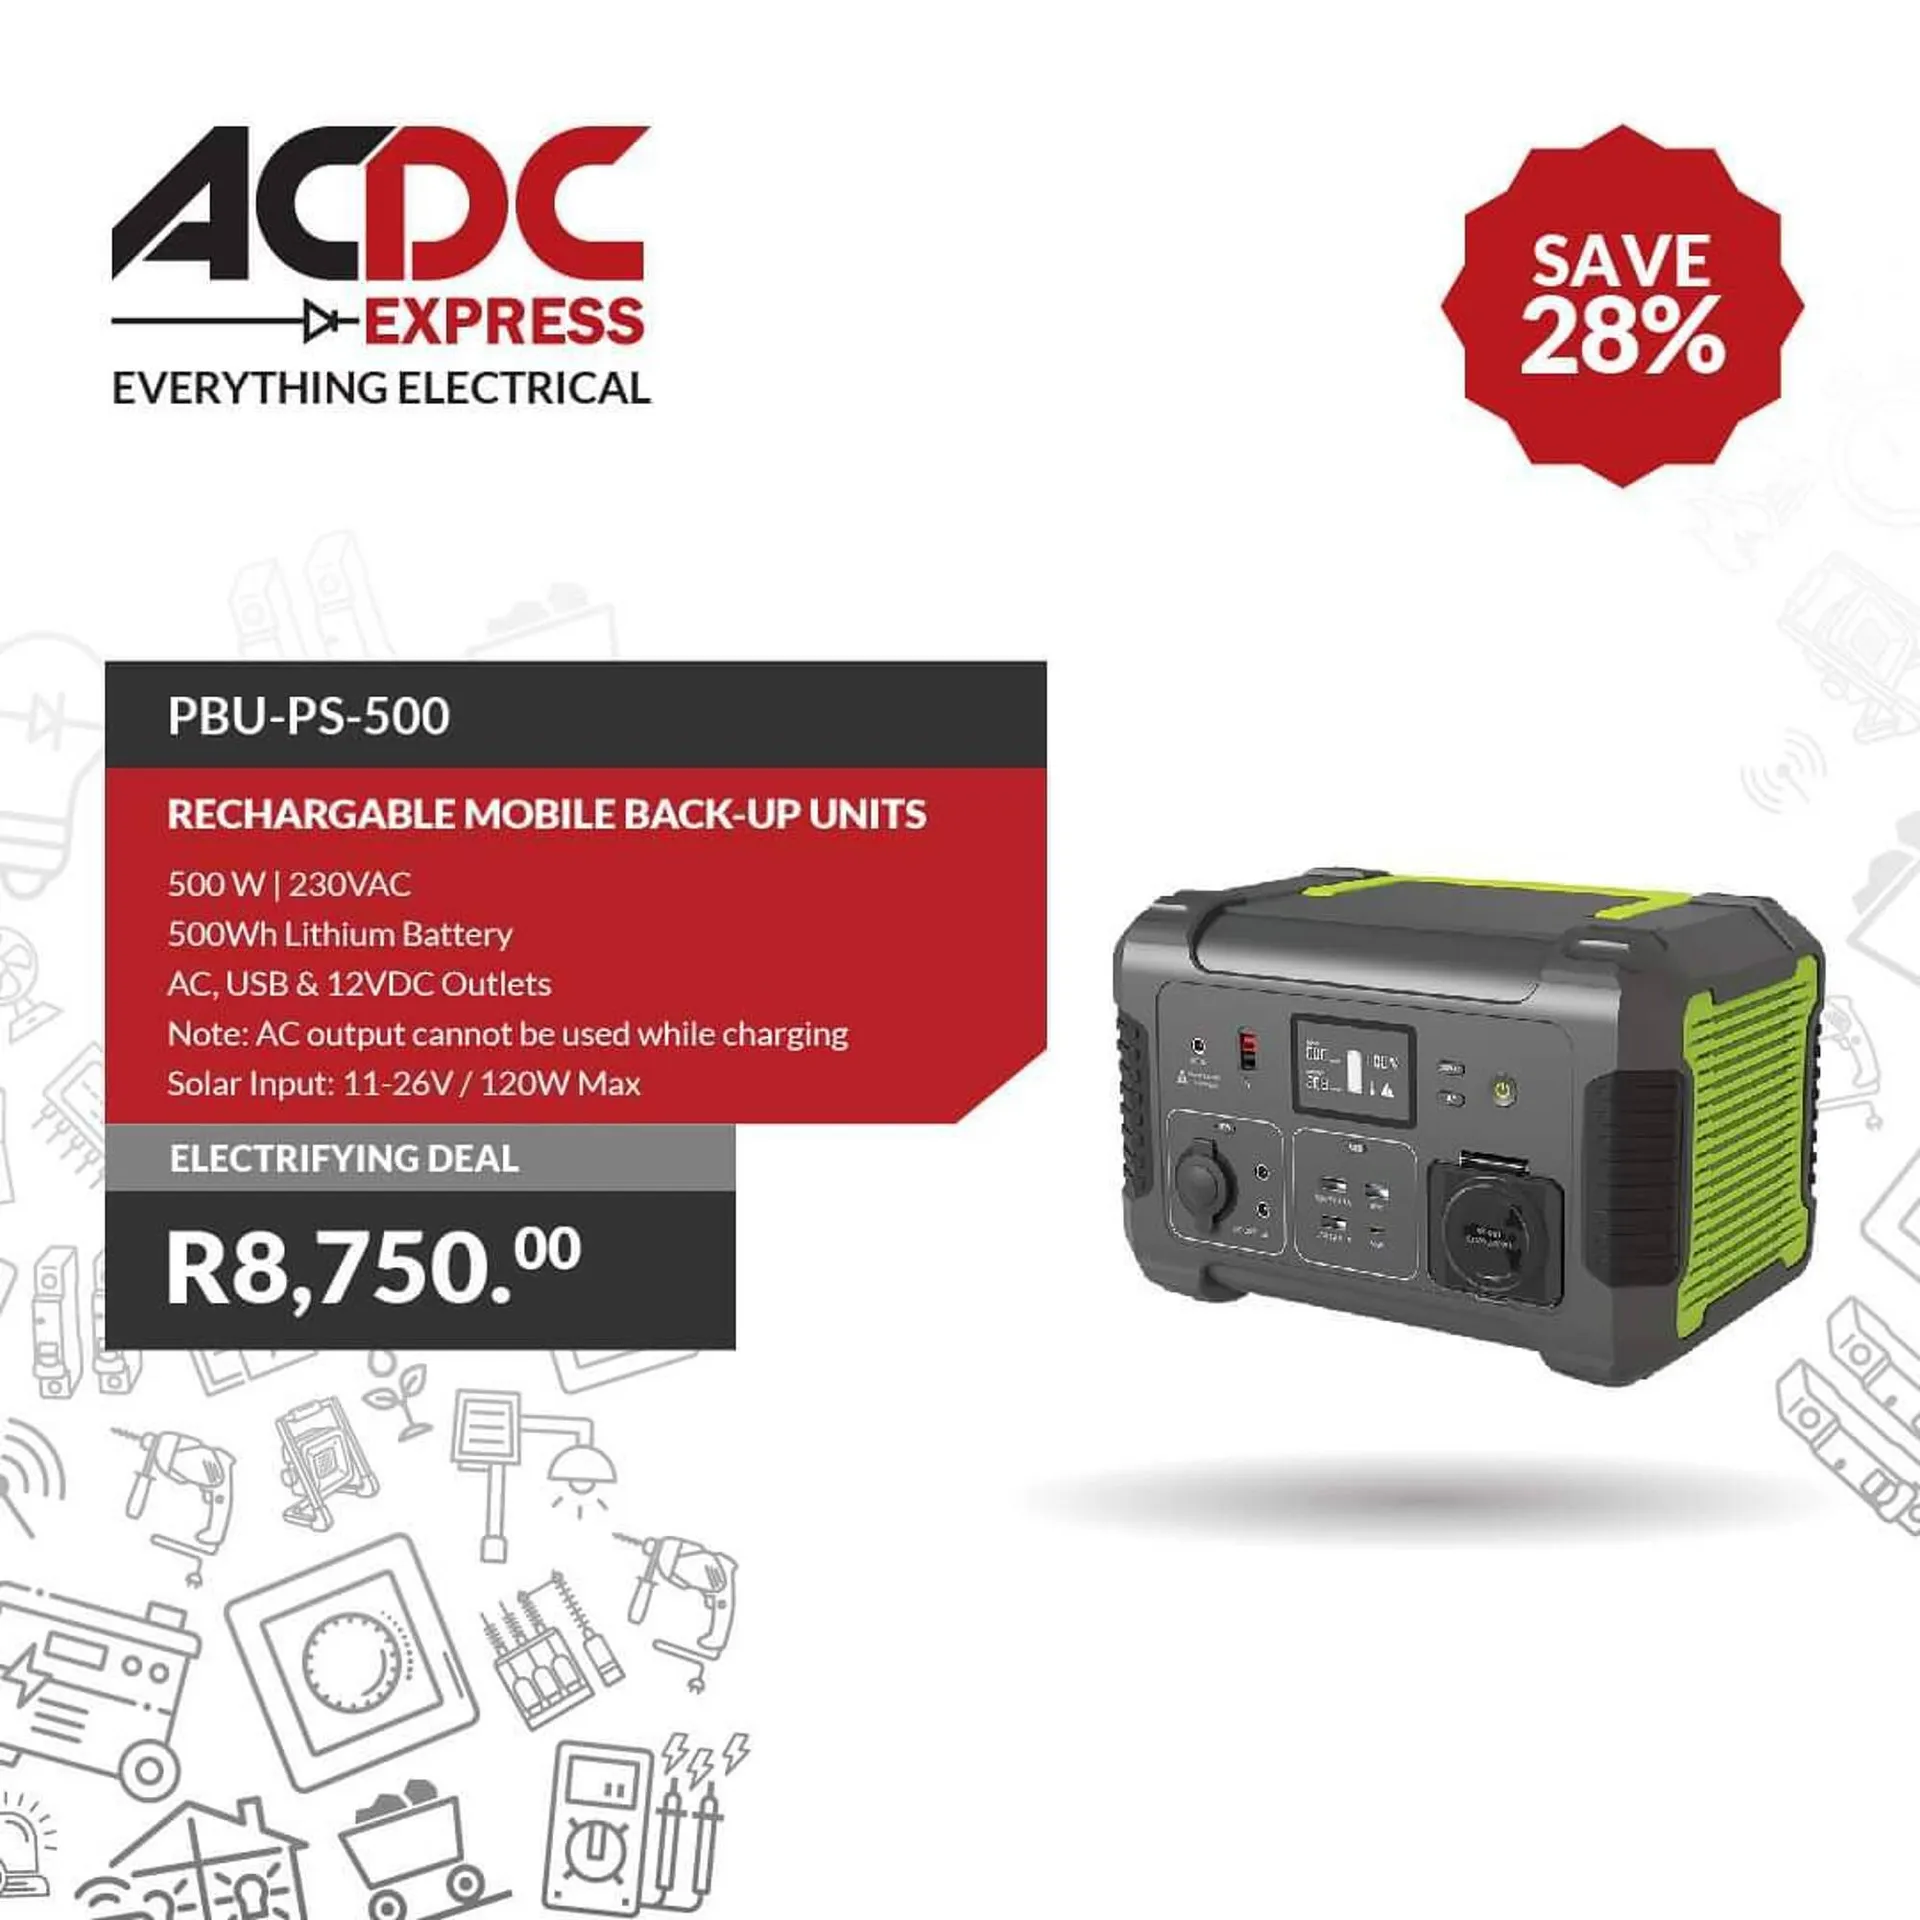 ACDC Express catalogue - 2